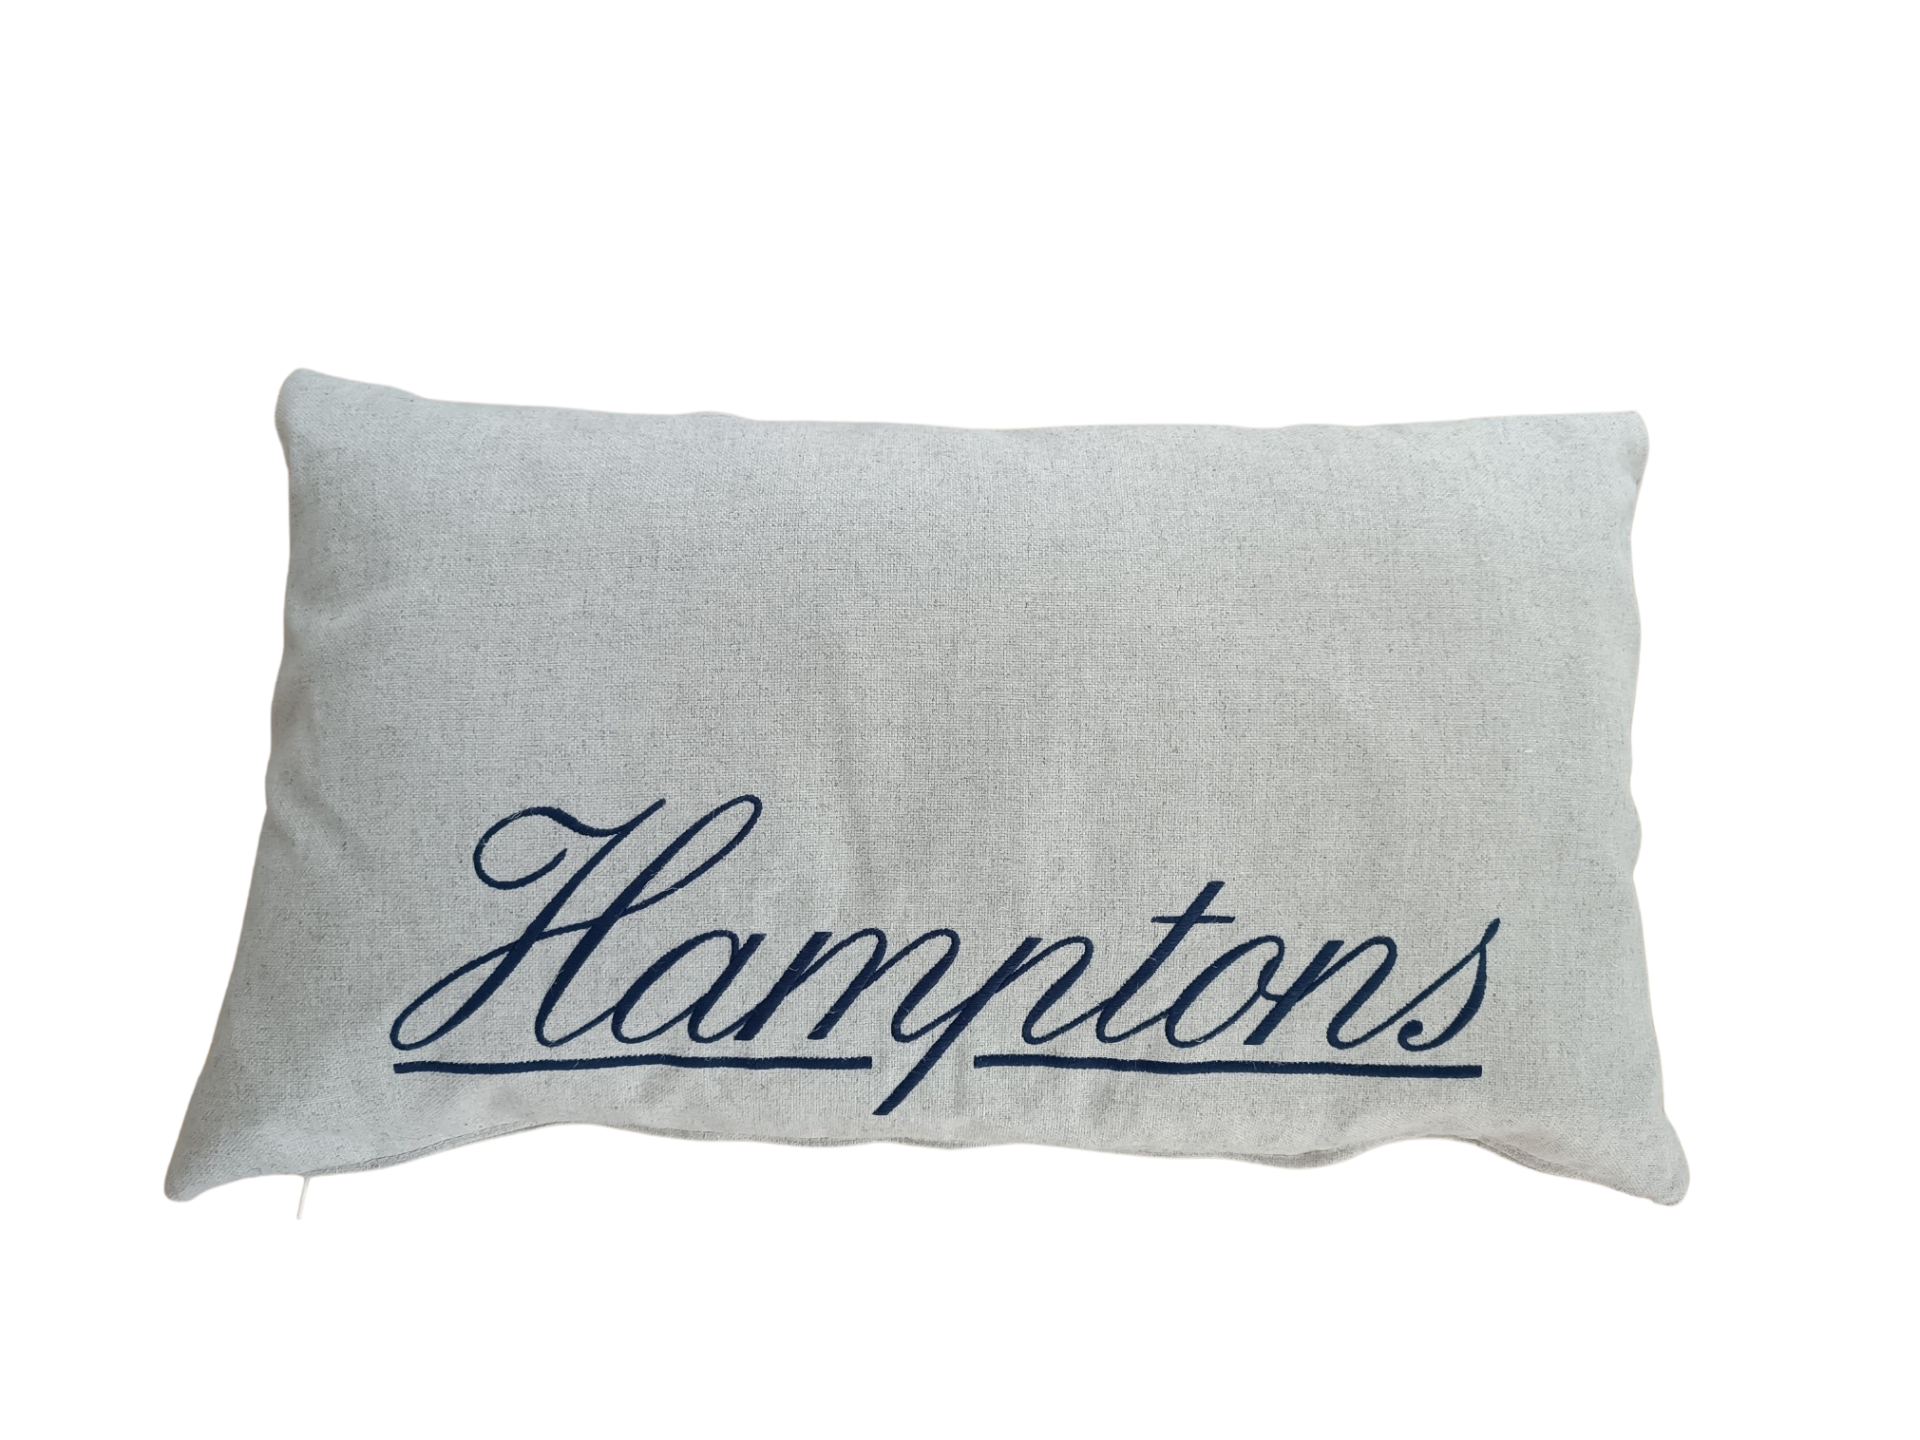 Hampton's Cushion